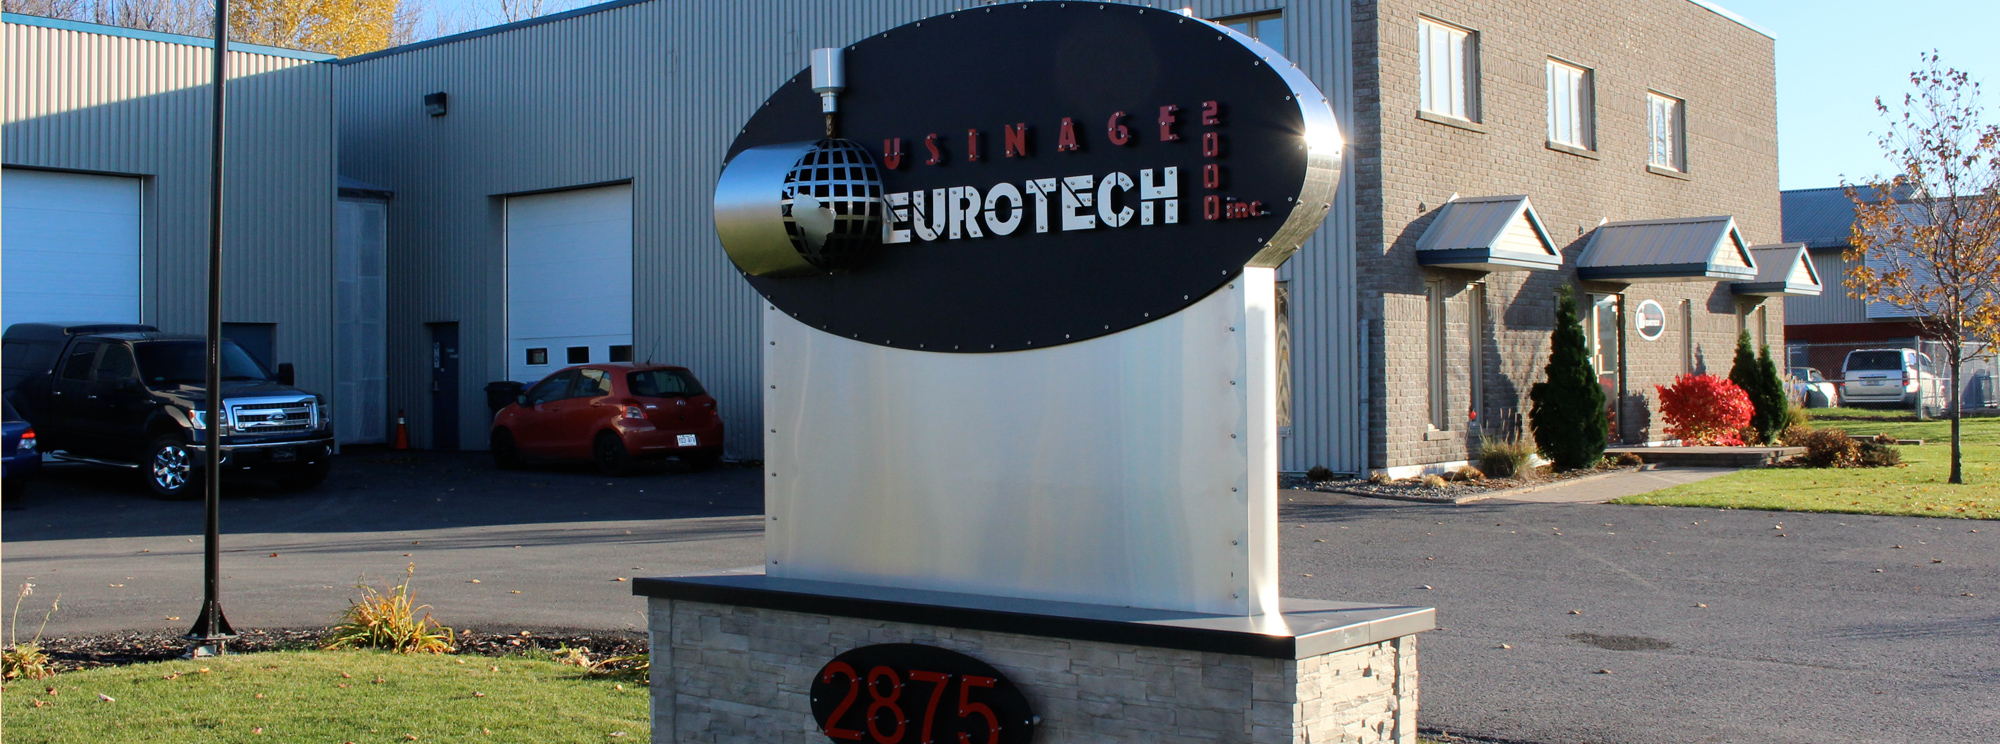 Usinage eurotech 2000 inc